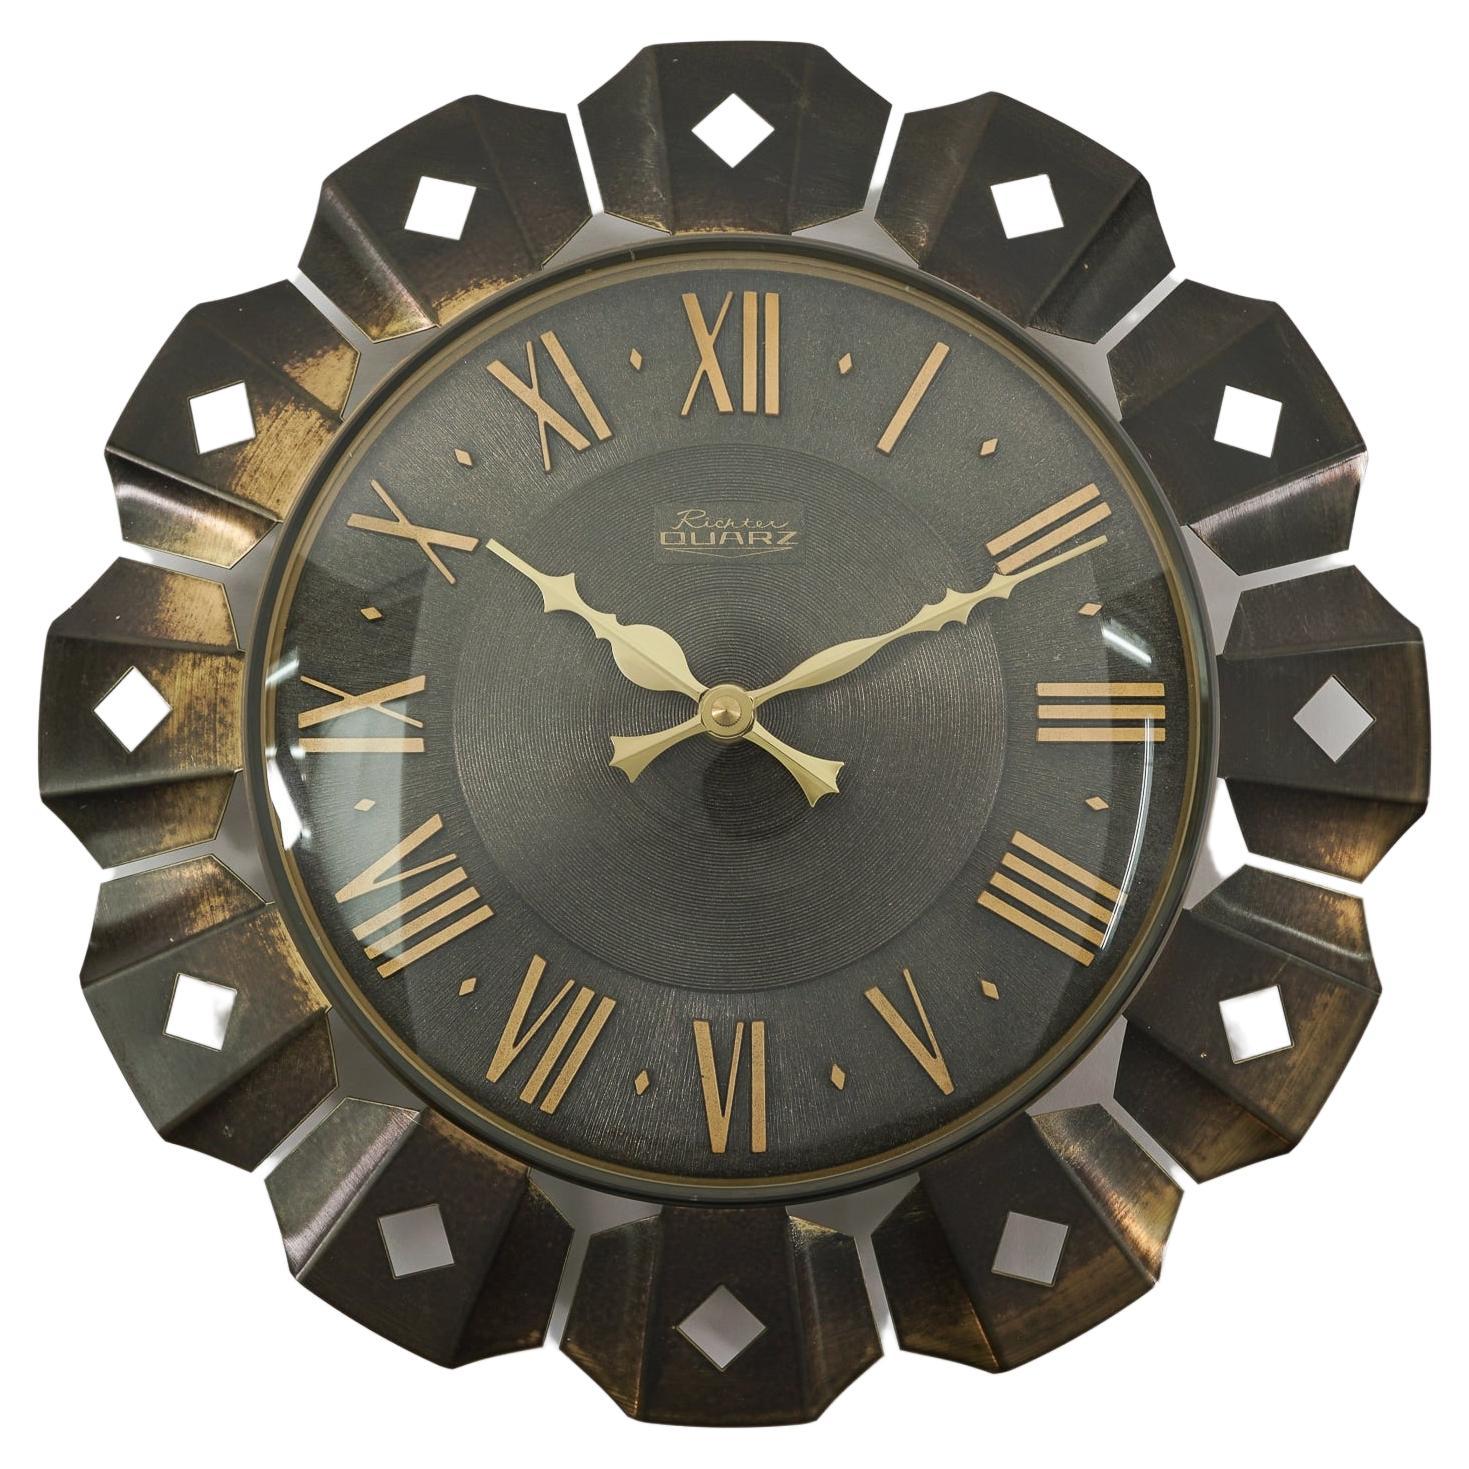 Mid-Century Modern Sunburst Wall Clock by Richter Quarz in Brass, 1960s Germany For Sale